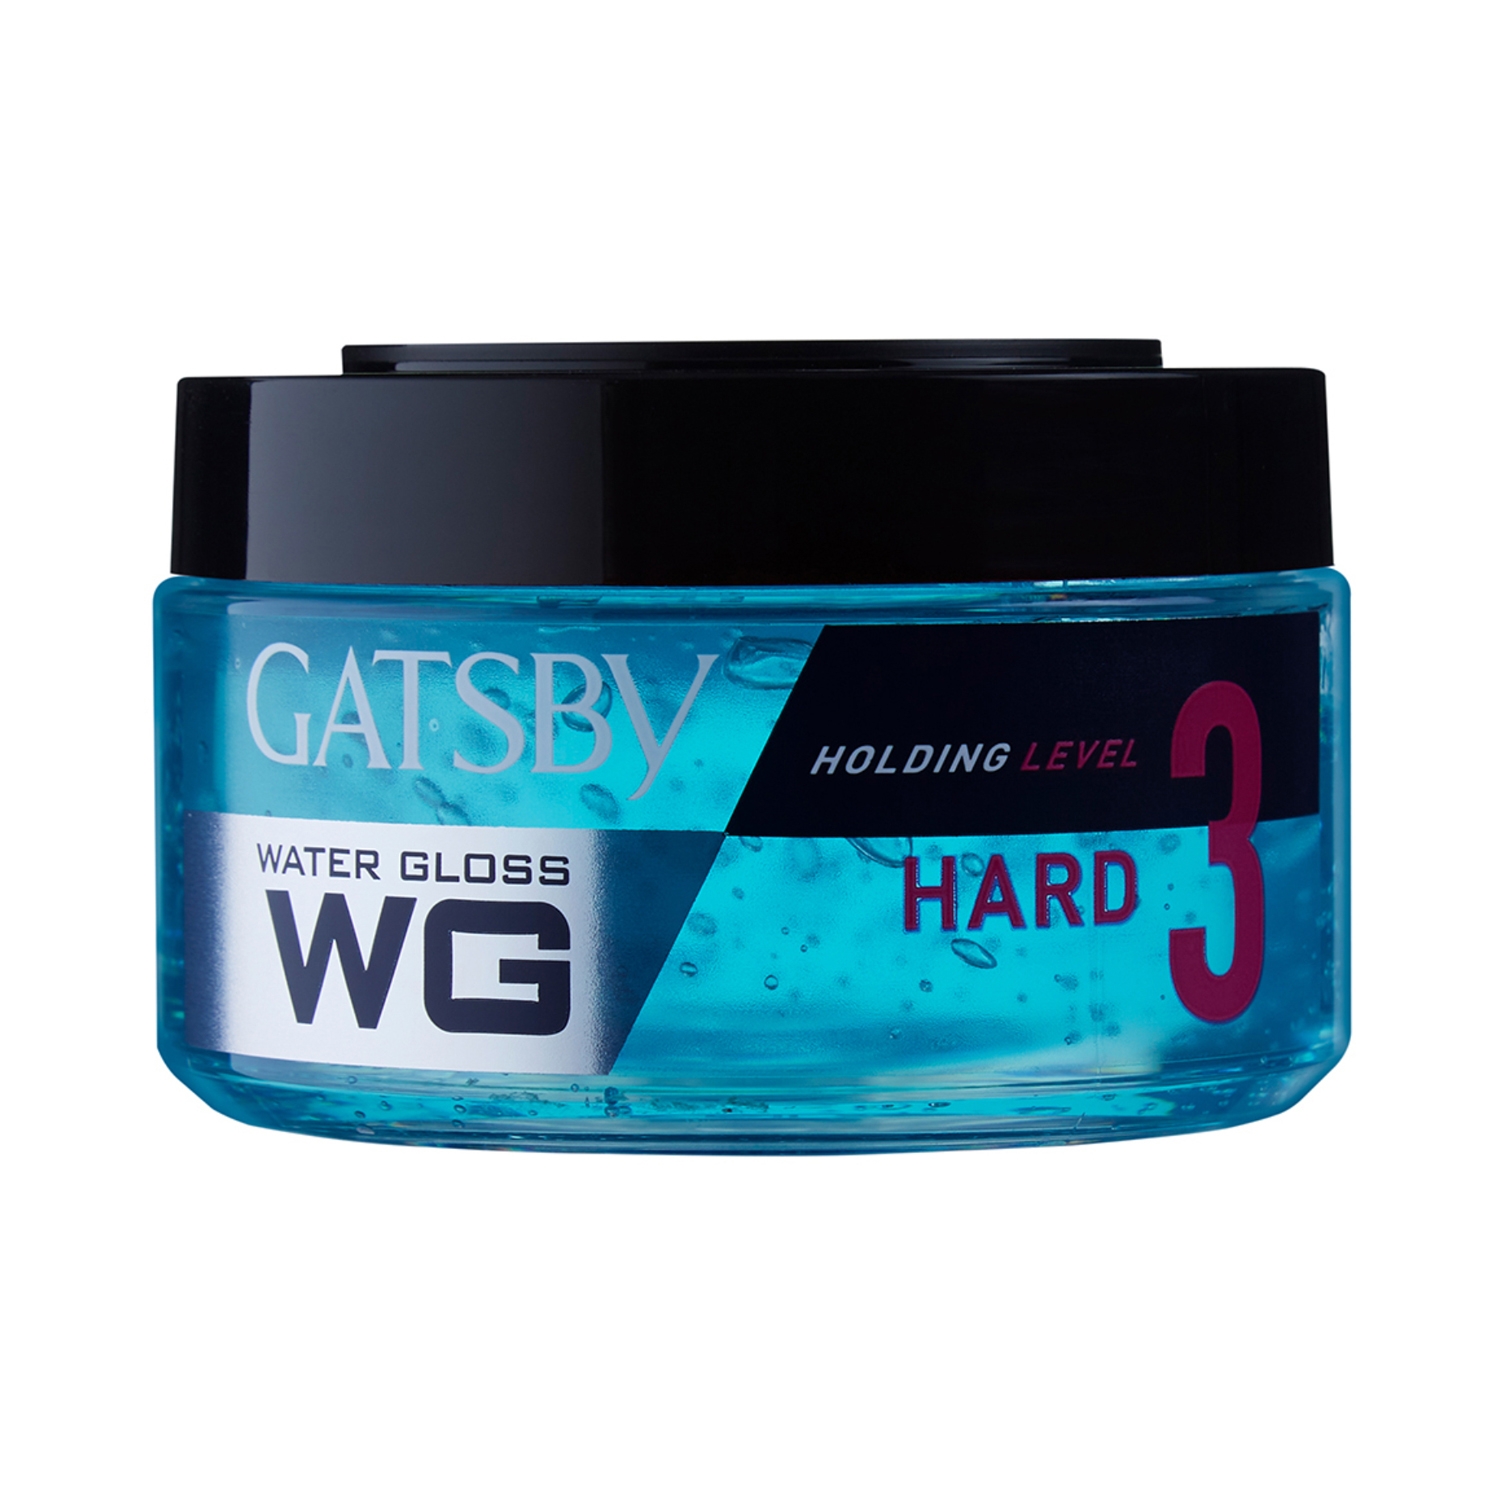 Gatsby Water Gloss Hard Gel (150g)